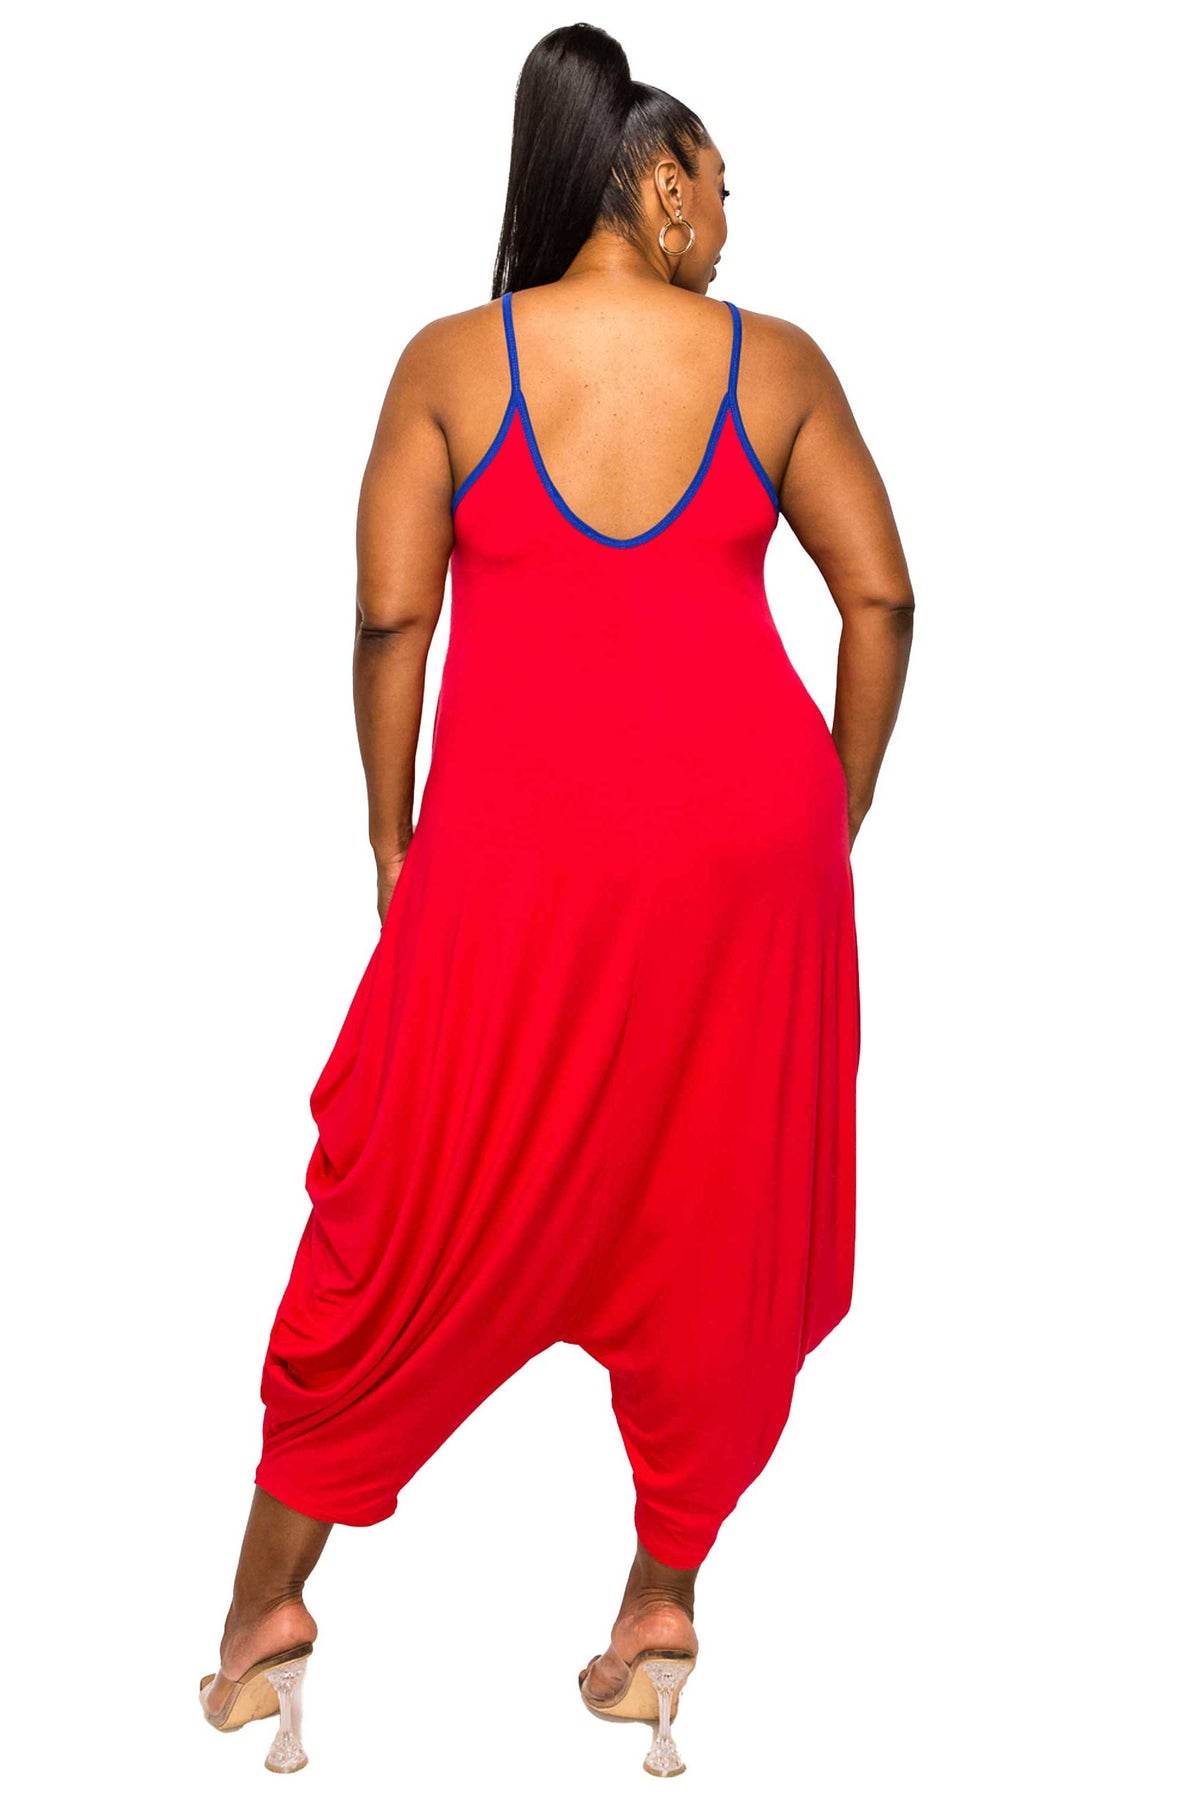 LIVD L I V D women's plus size harem jumpsuit in red